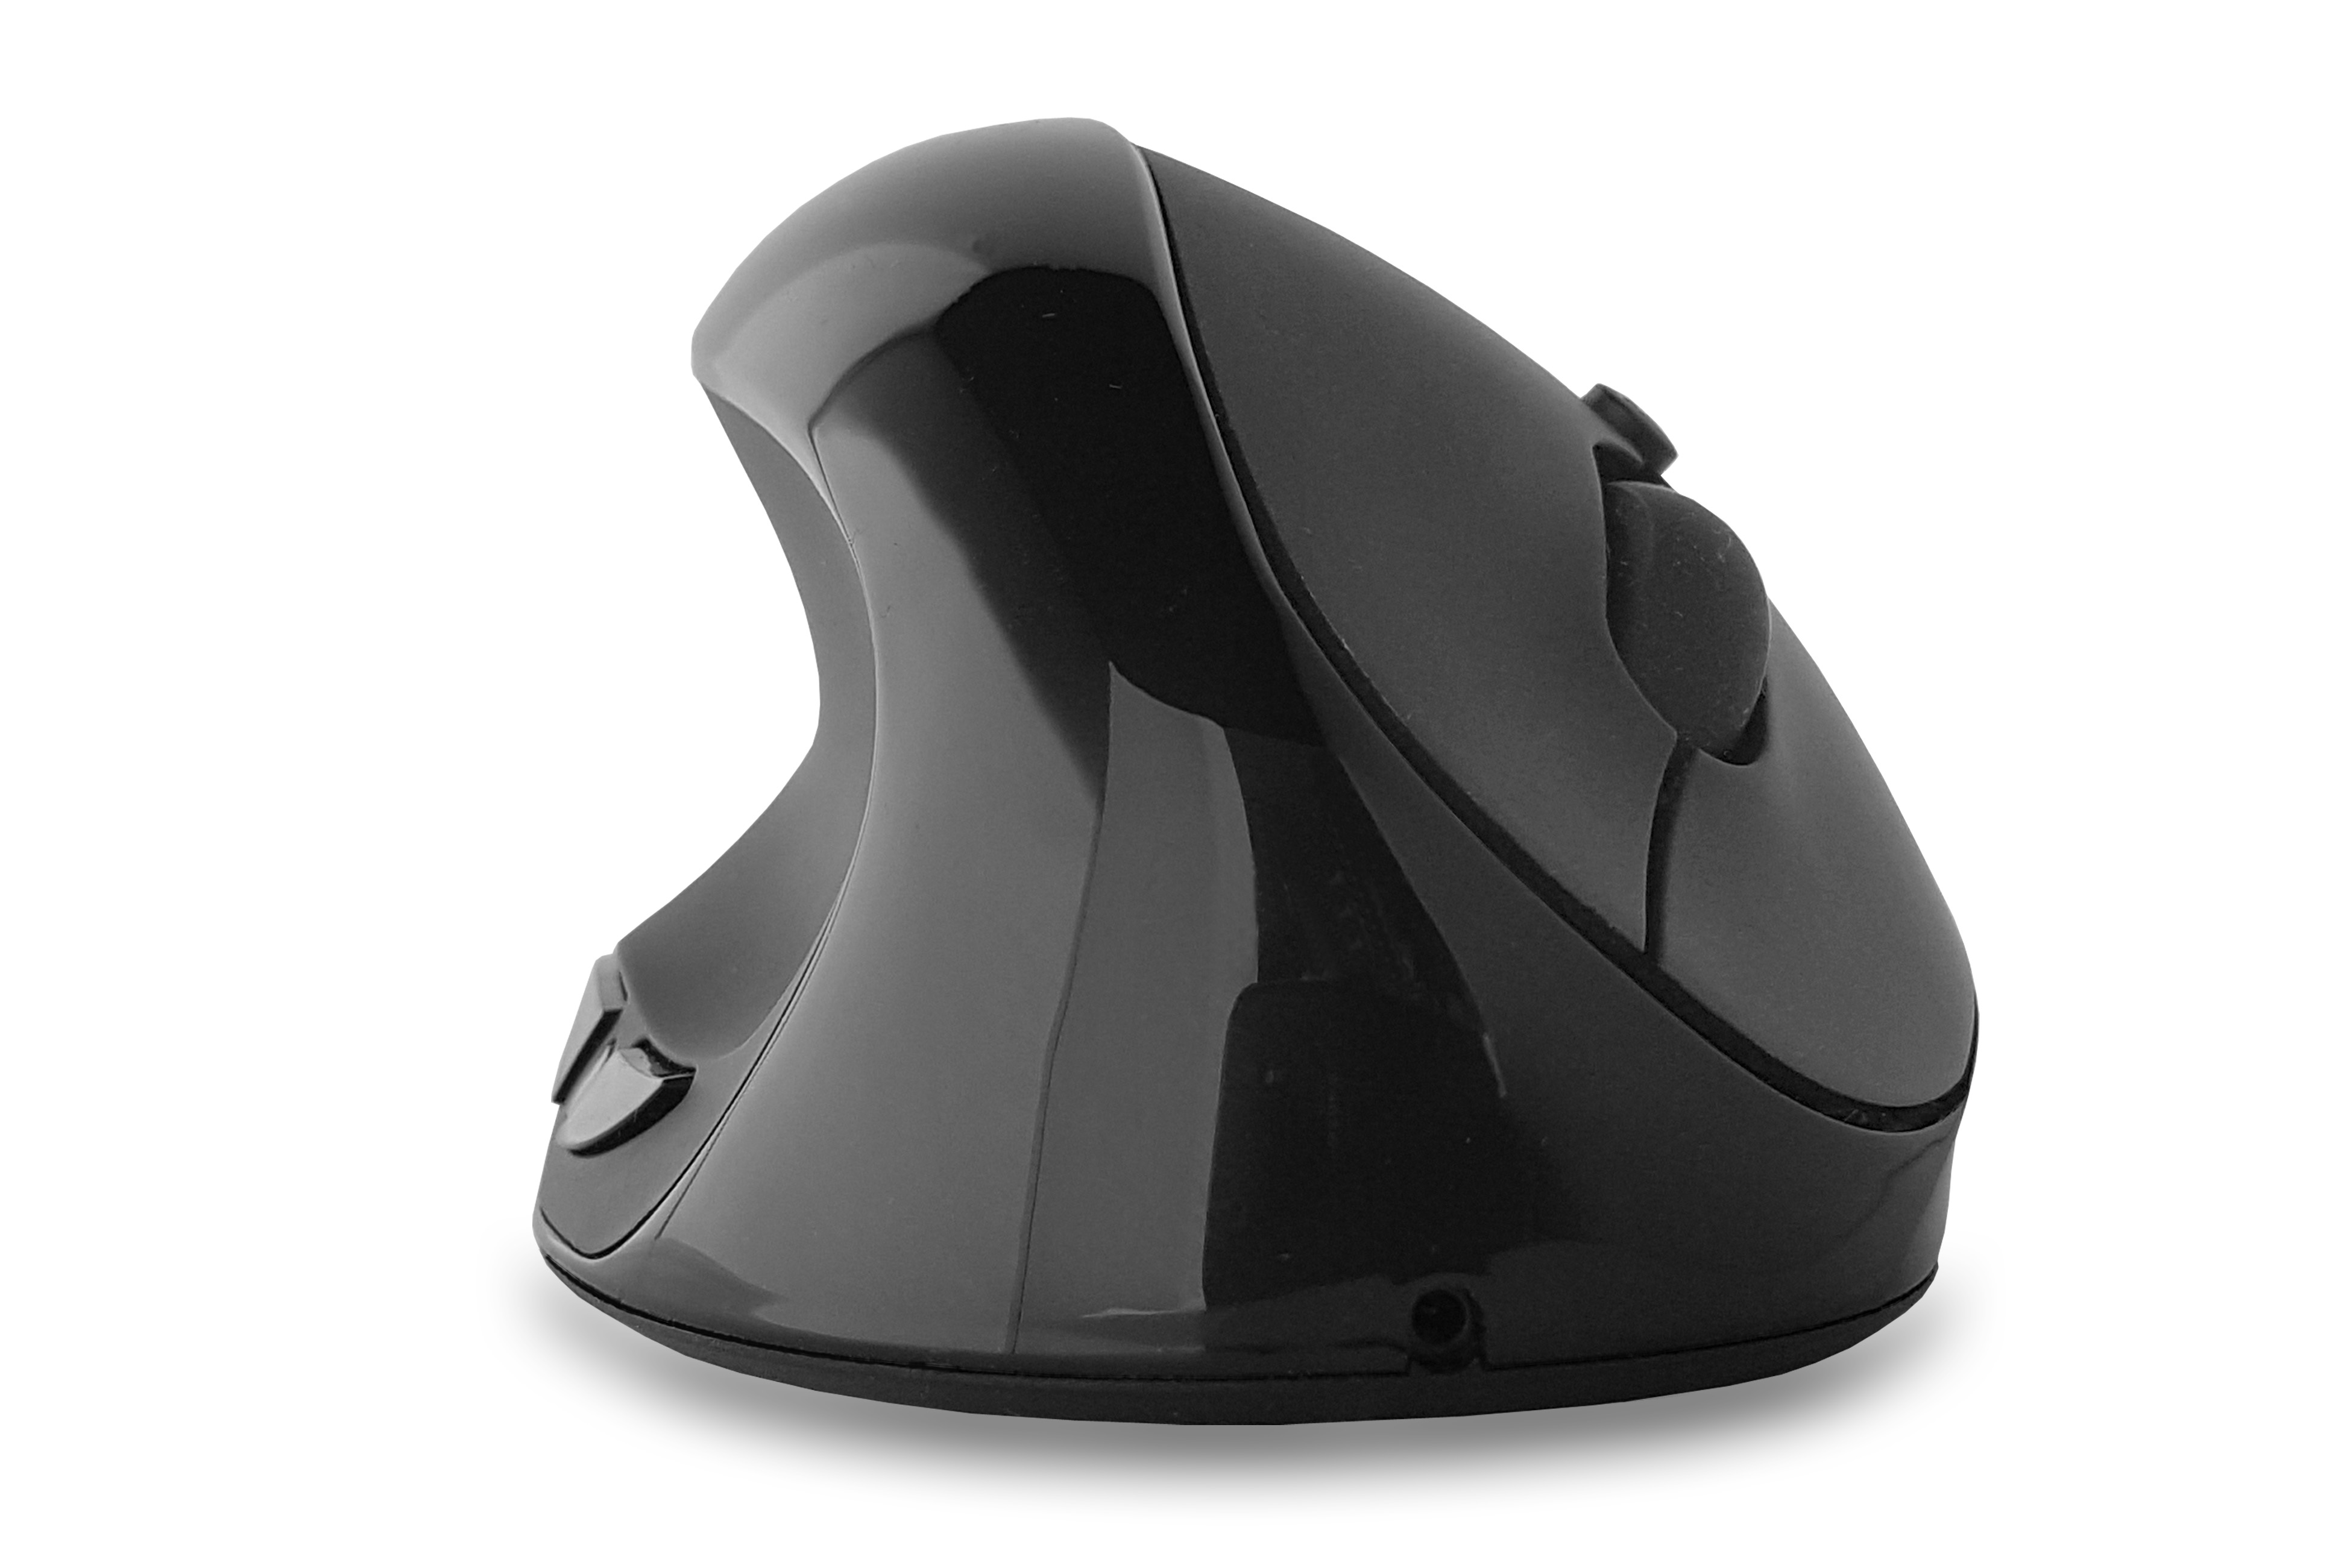 JI-CS-02 Maus, JENIMAGE schwarz Kabel USB Linkshänder ergonomische Links